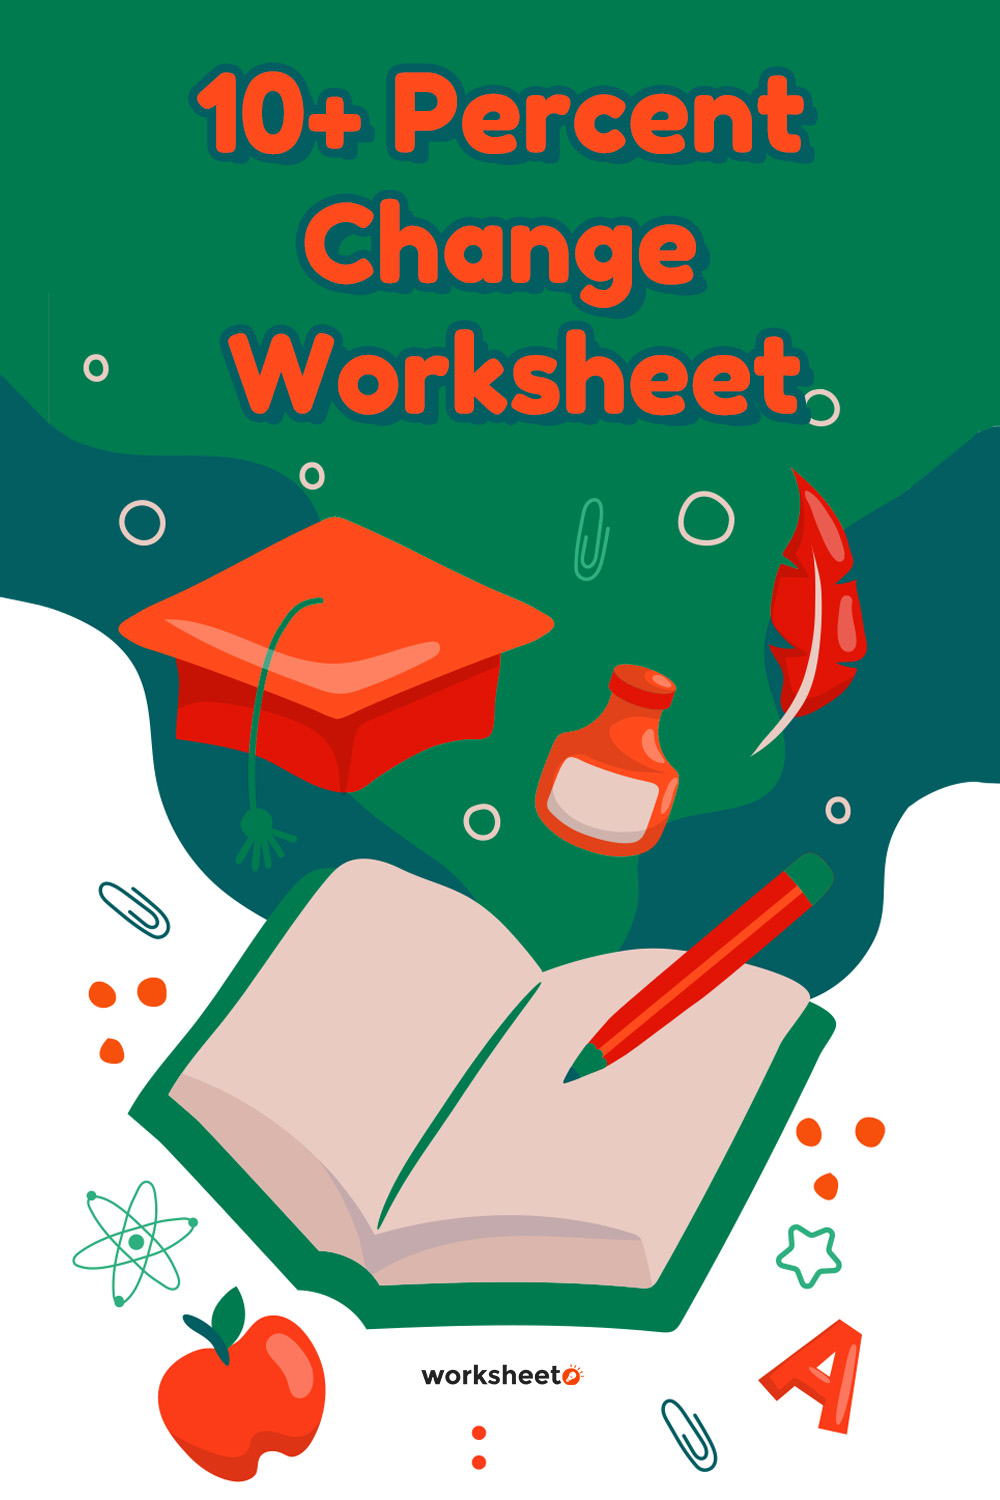 Percent Change Worksheet